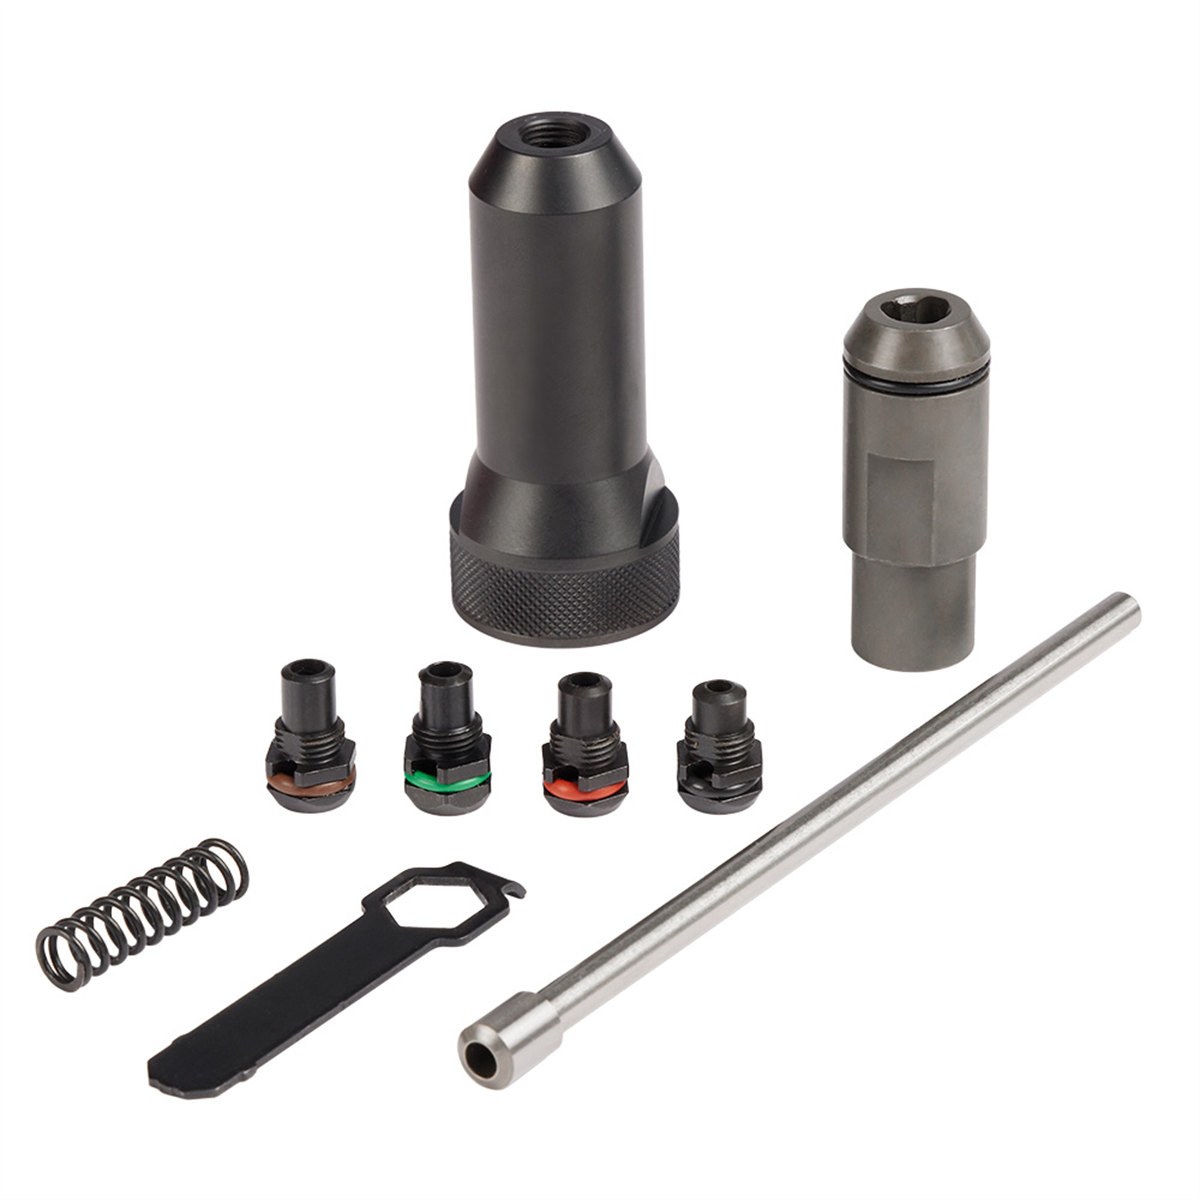 M18 FUELâ„¢ 1/4" Lockbolt to Blind Rivet Tool Conversion Kit